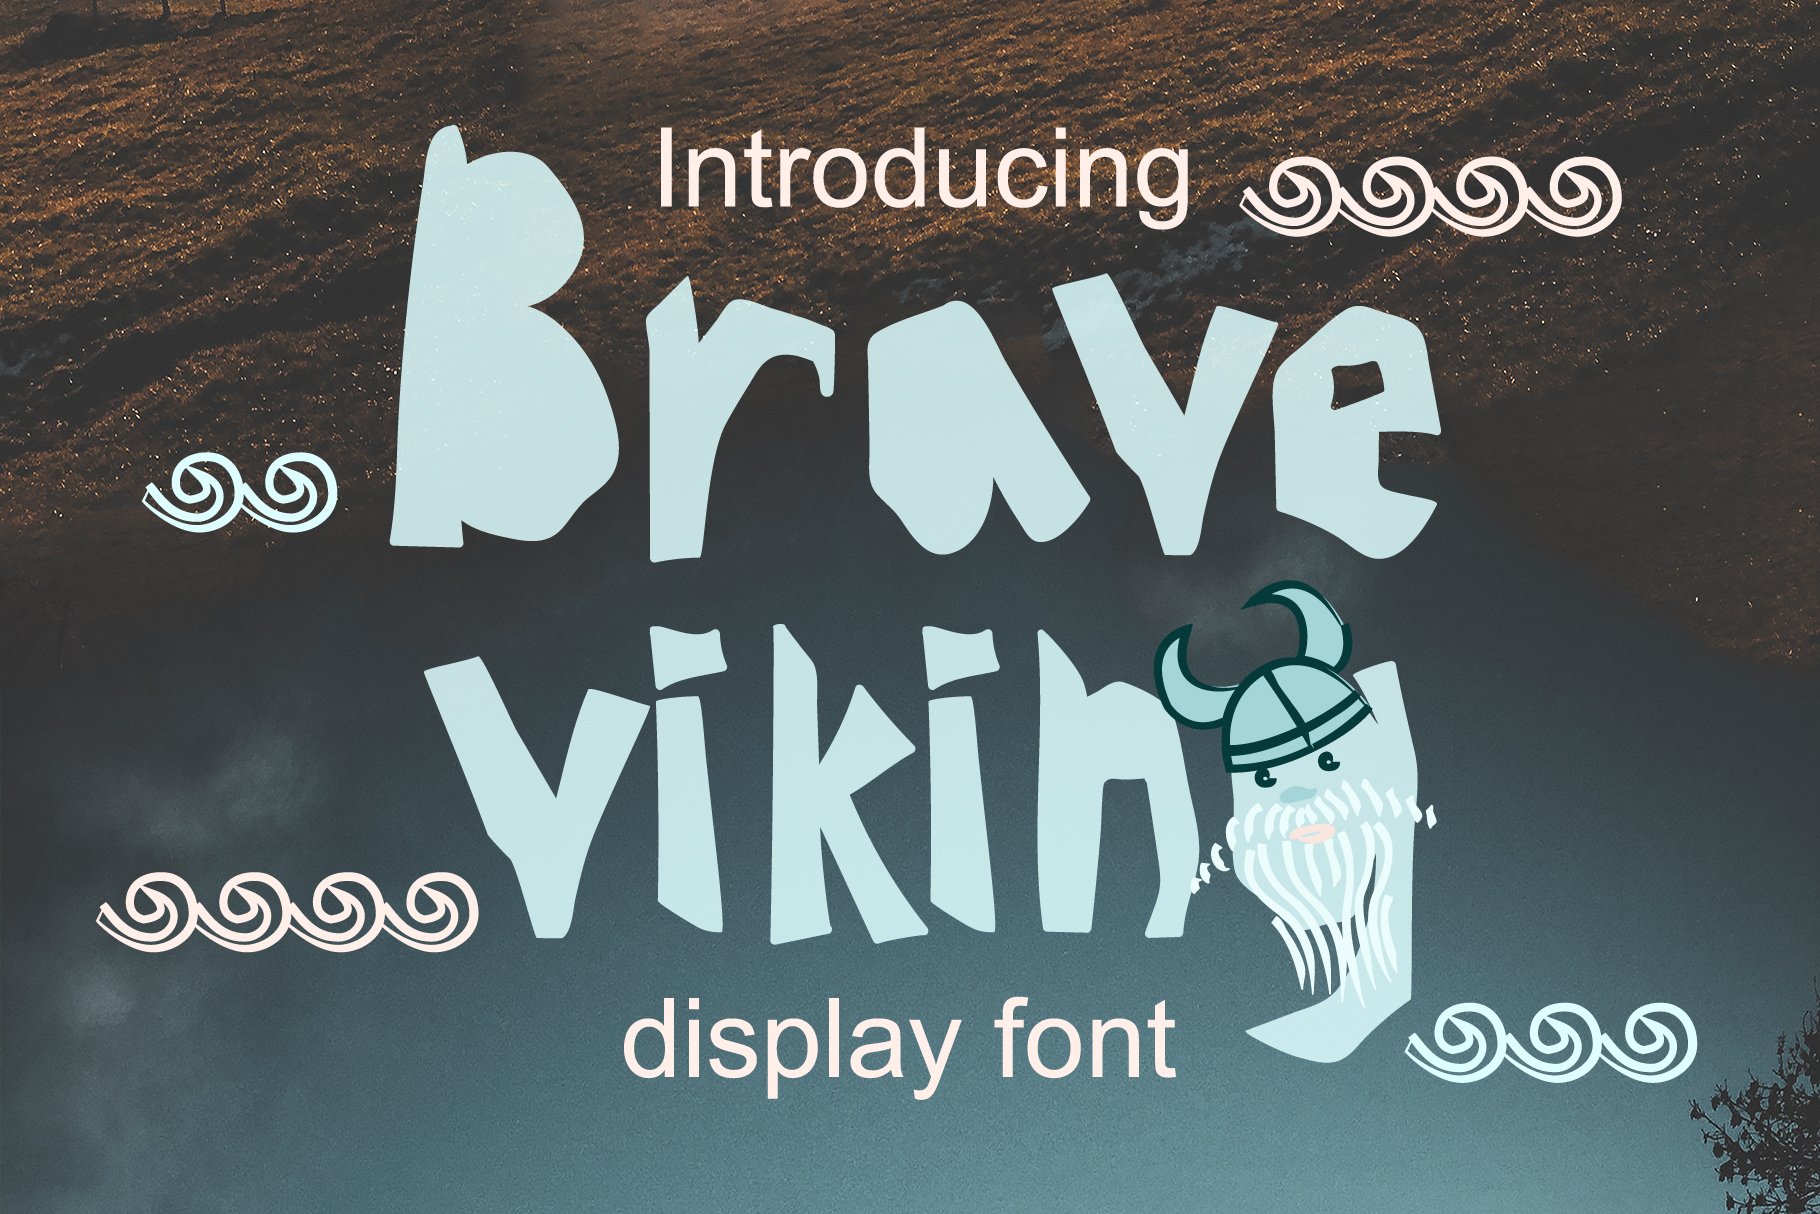 BRAVE-VIKING OTF font cover image.